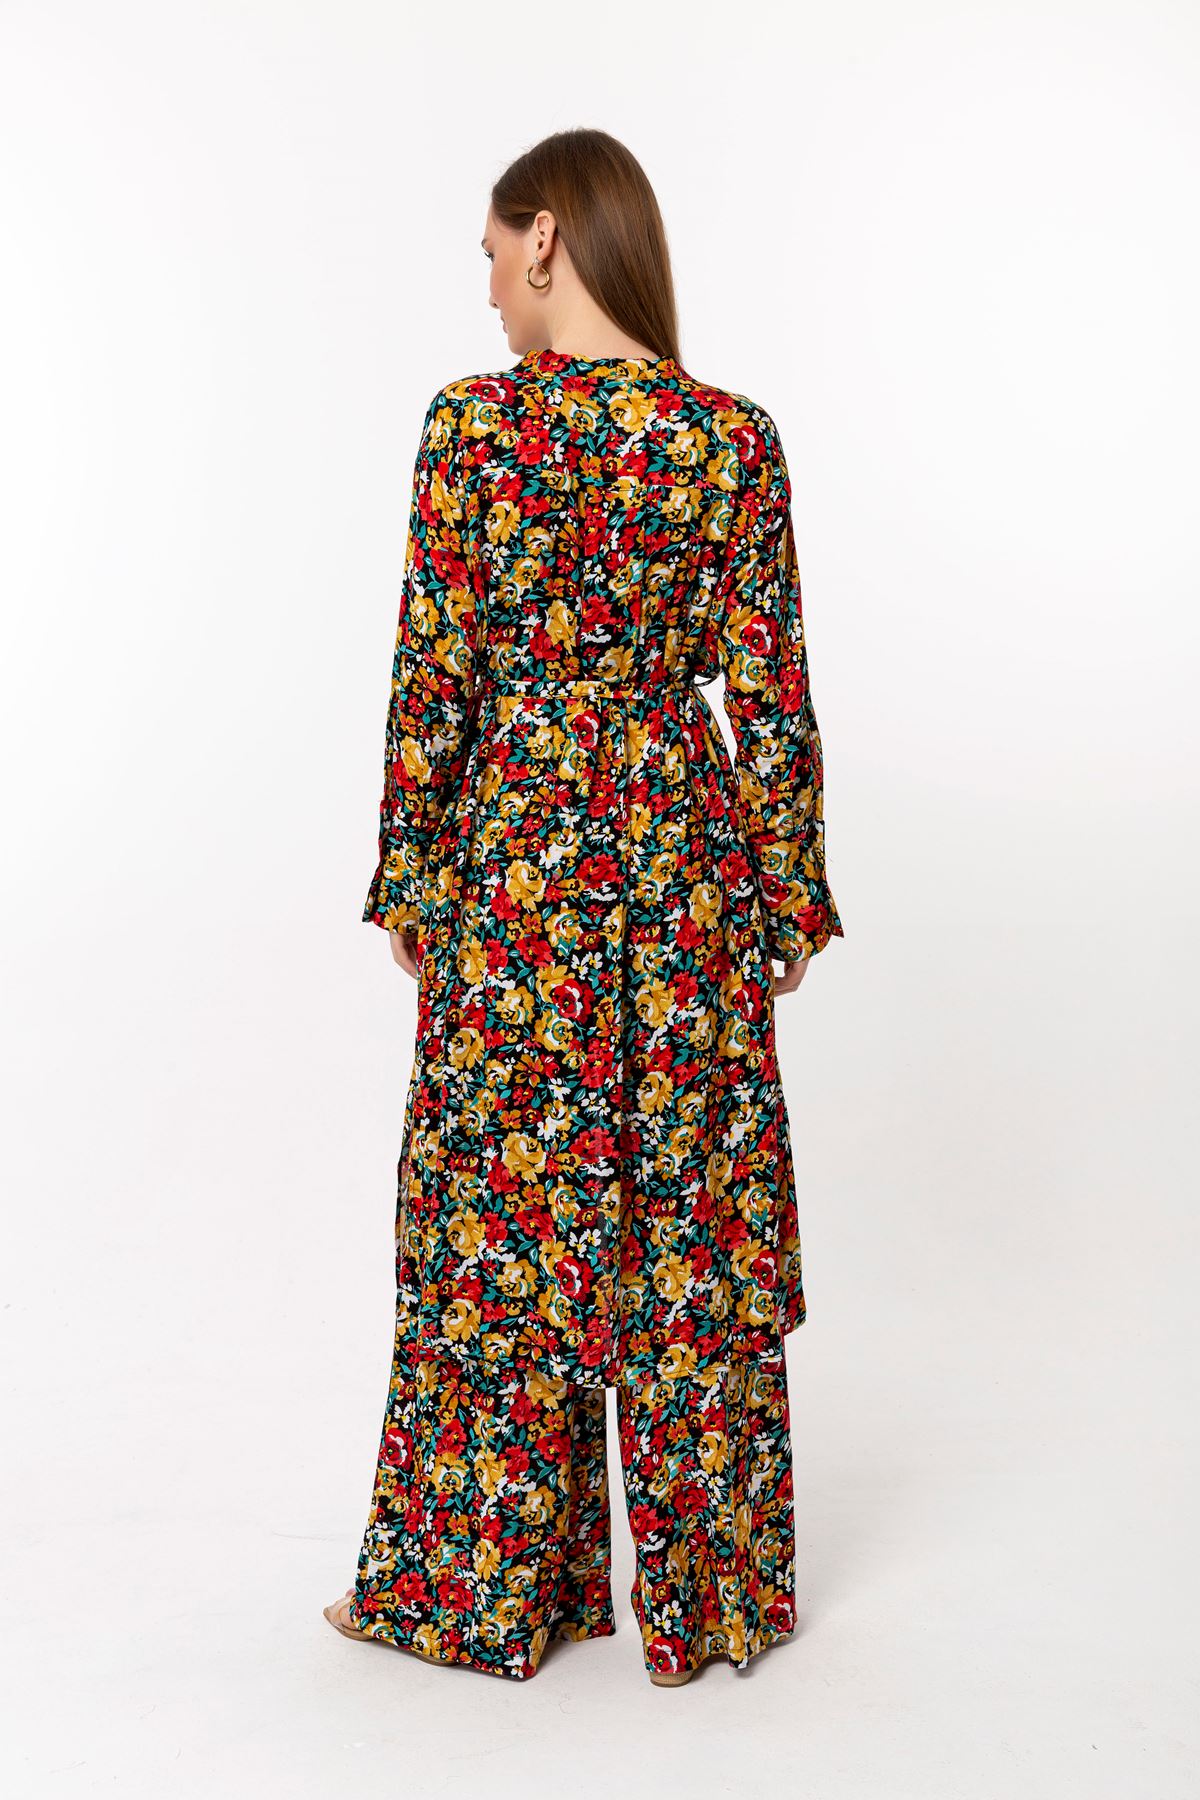 Viscose Fabric Long Sleeve Without Collar Long Oversize Floral Print Women Kimono - Mustard